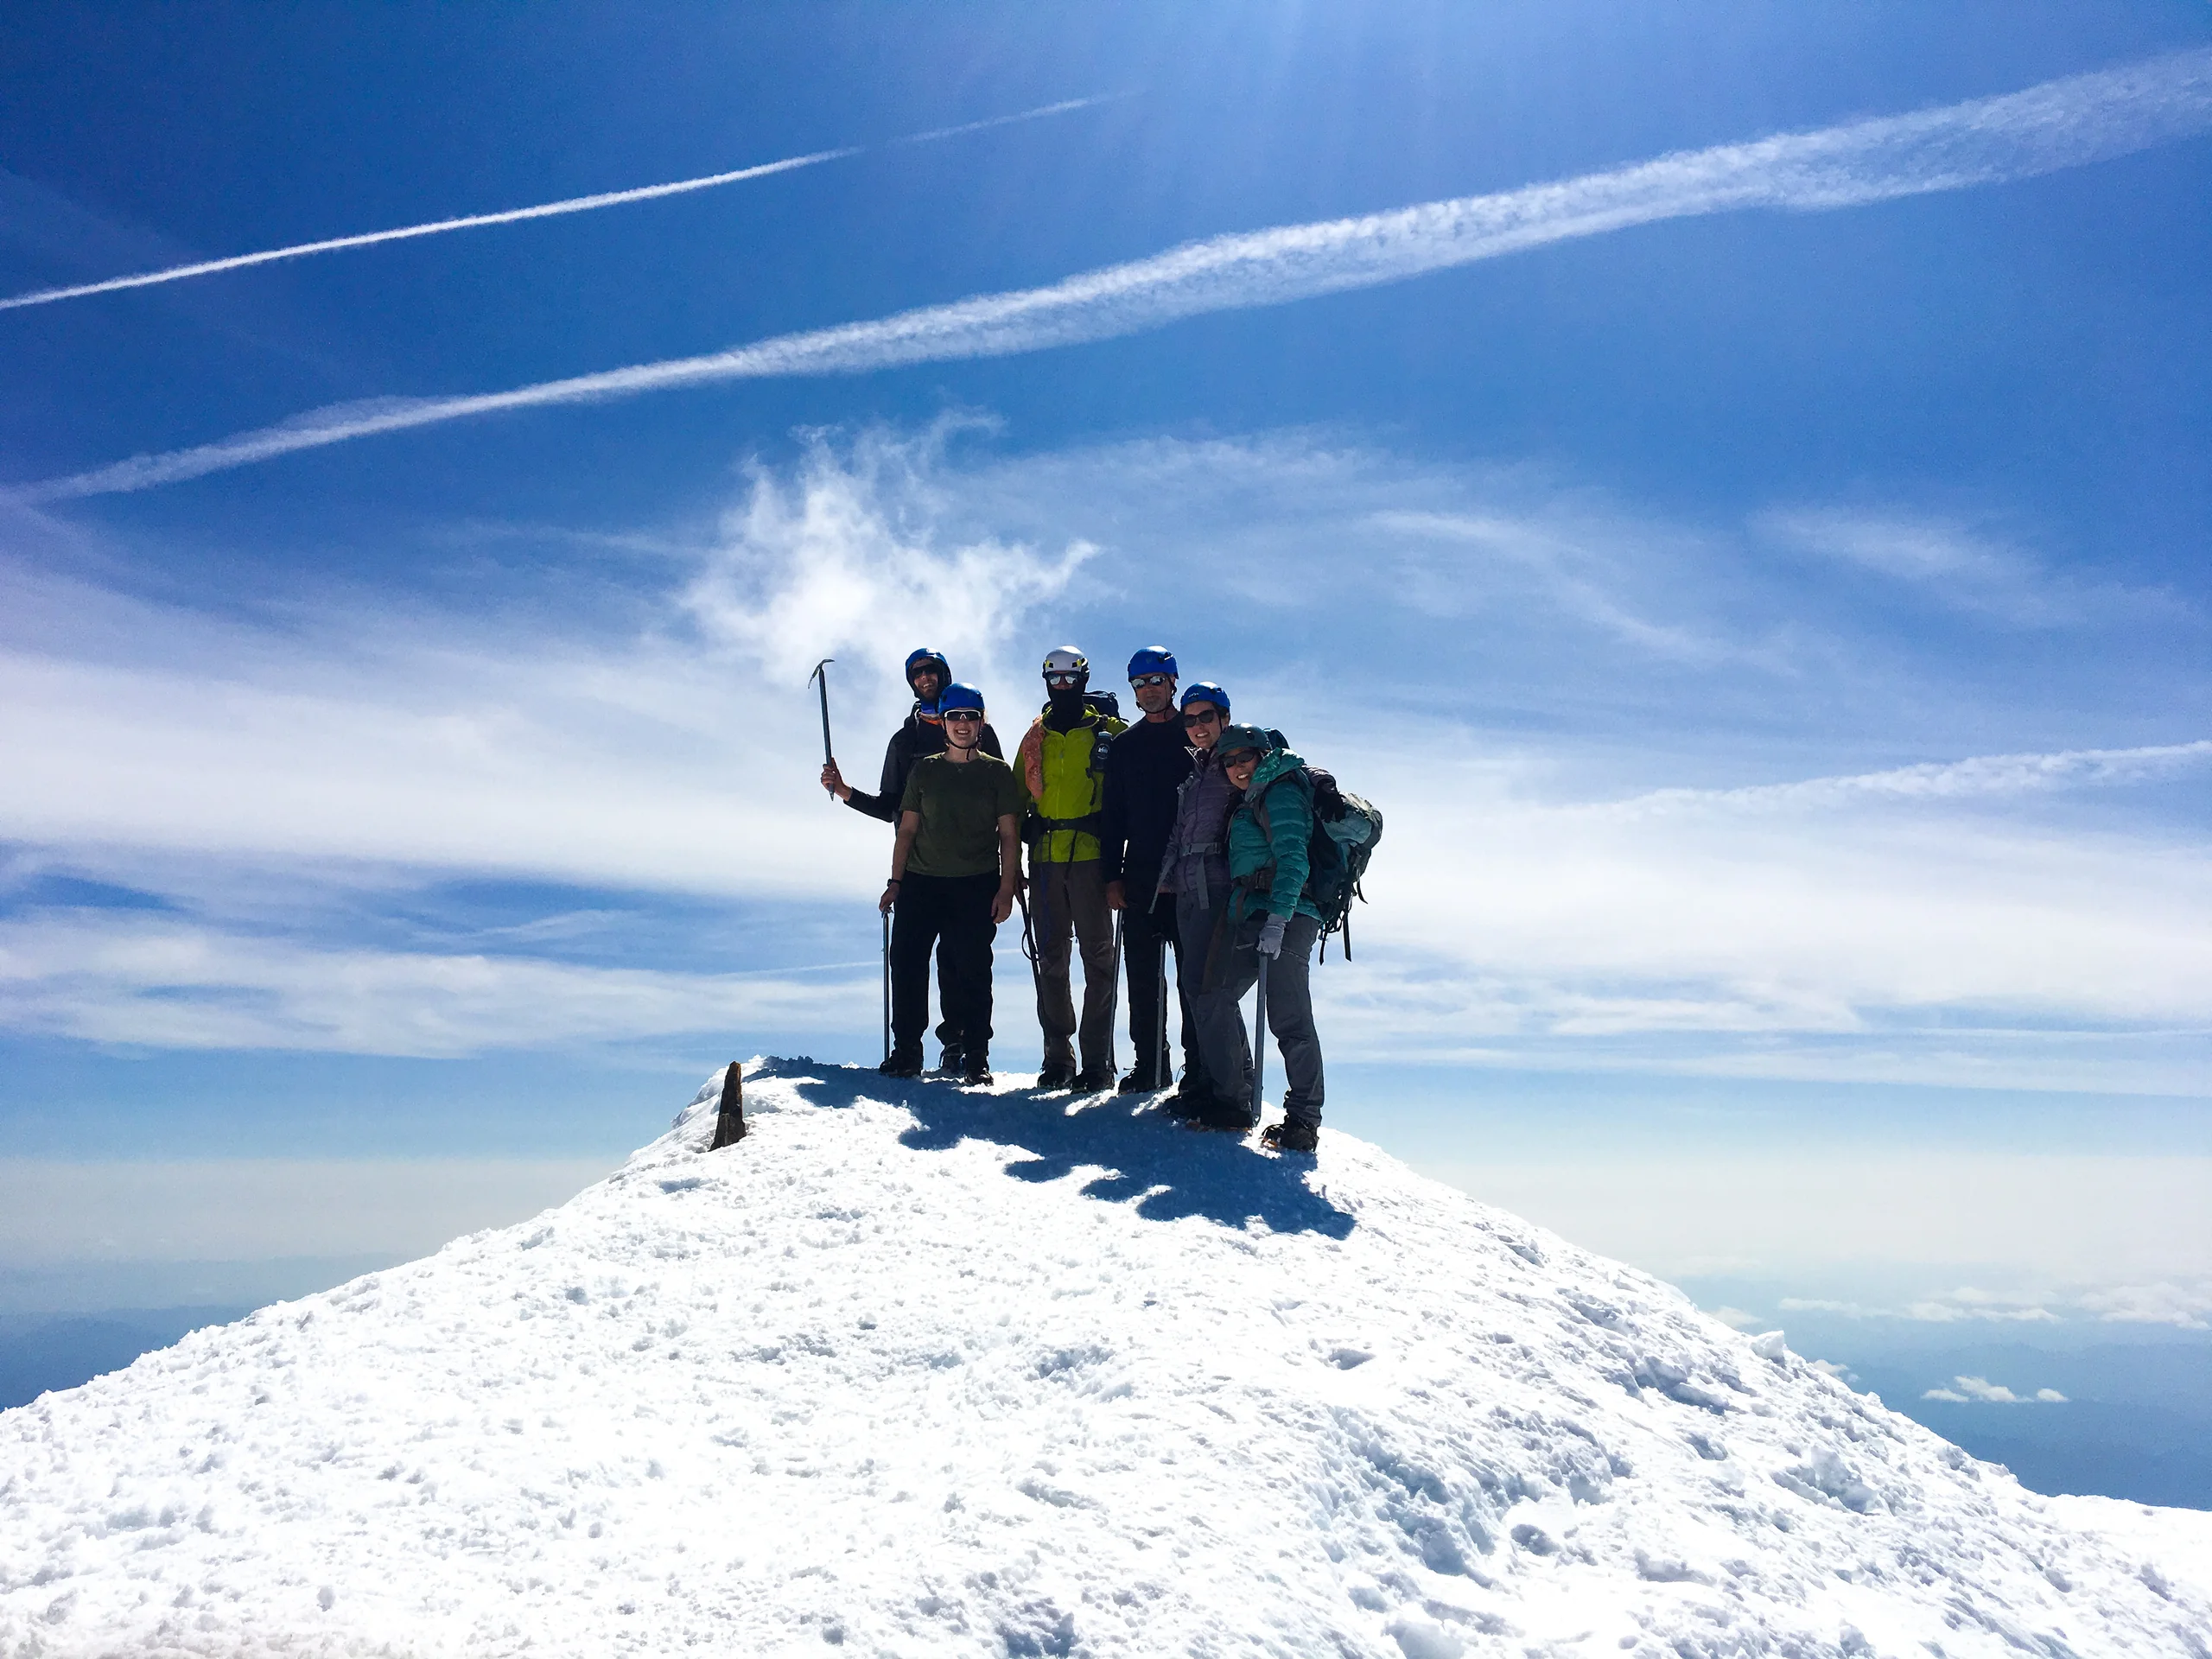 Hike Mount Adams - Trail to Summit